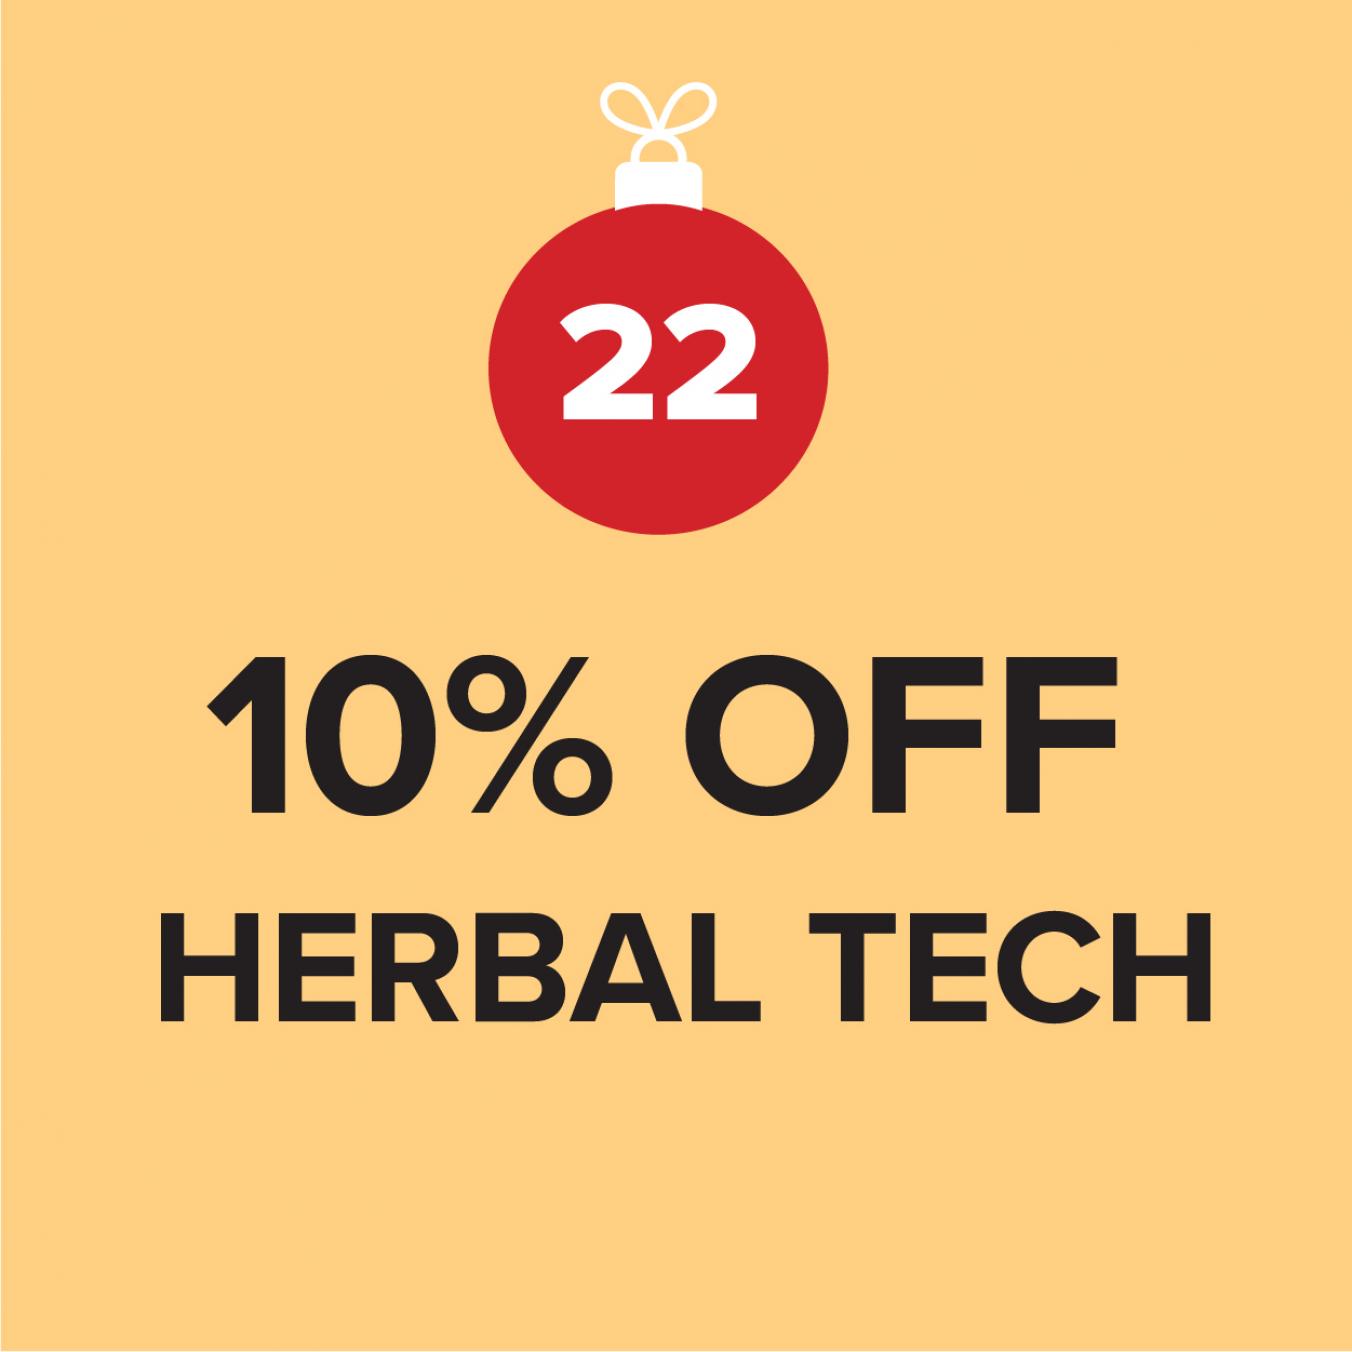 10% Off Herbal Tech!